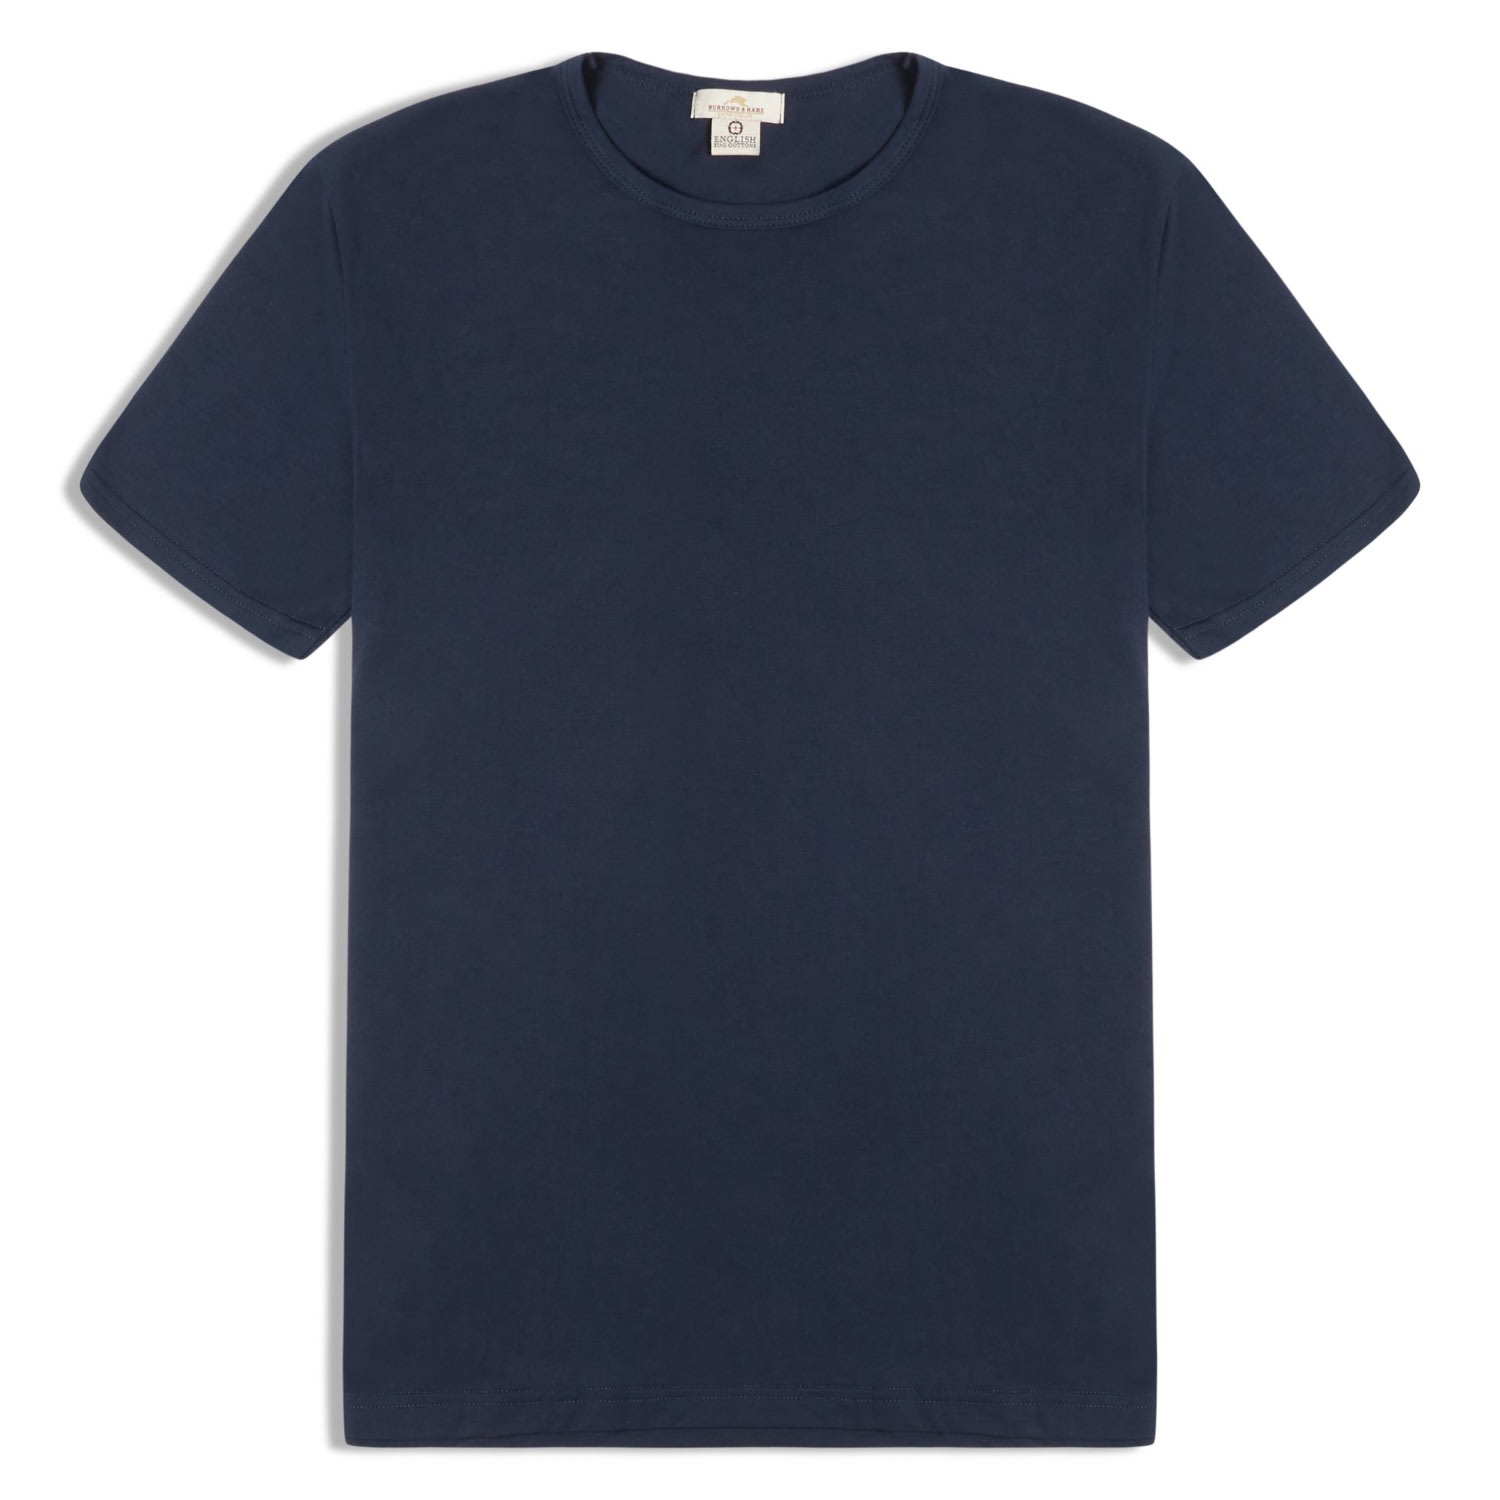 Men’s Blue T-Shirt - Navy Small Burrows & Hare